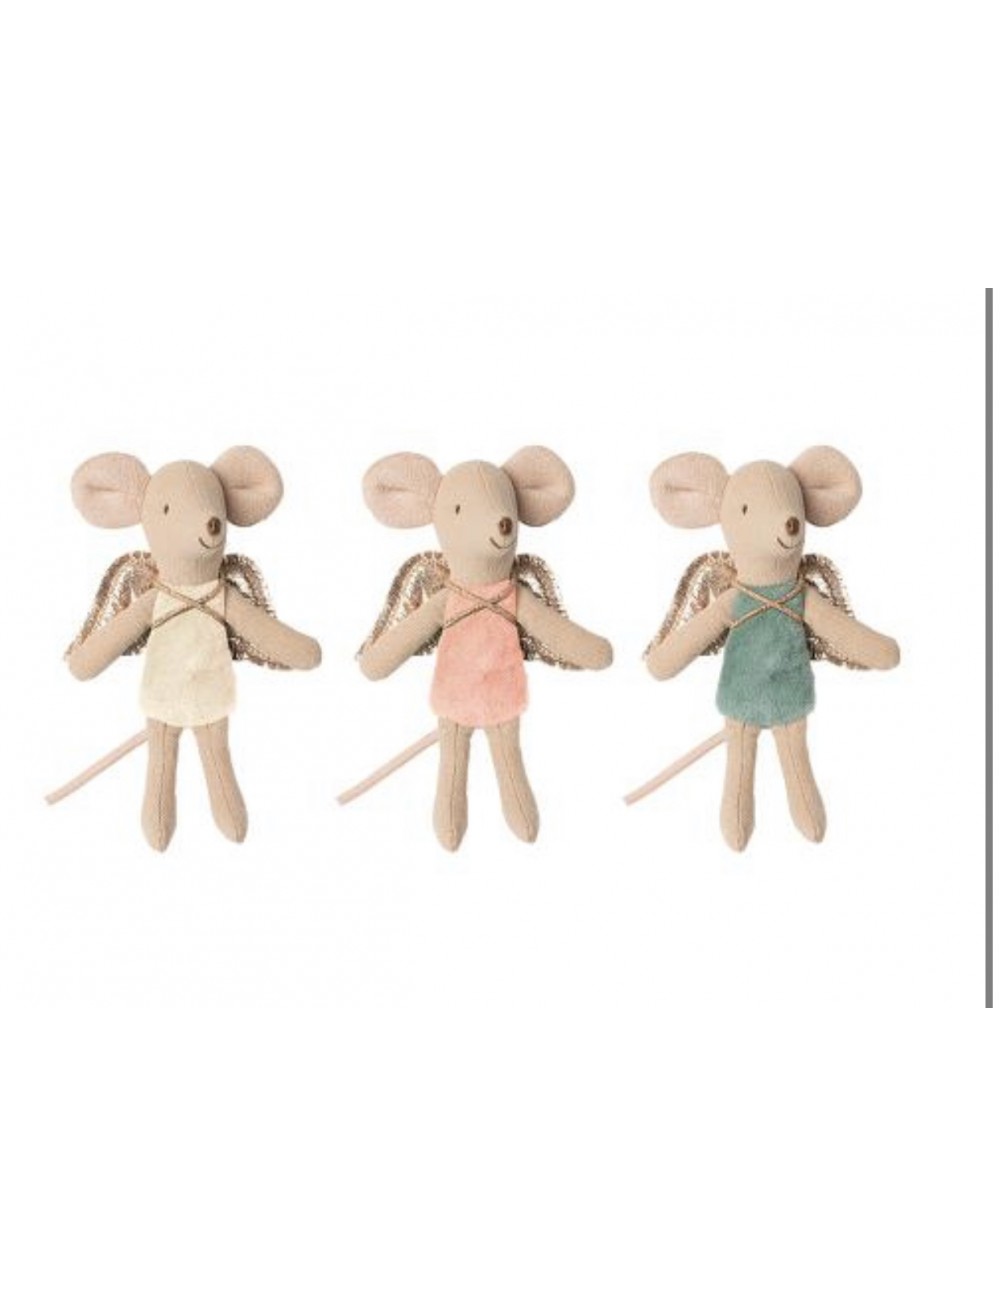 Petite souris ange / Fairy Mouse Little sister